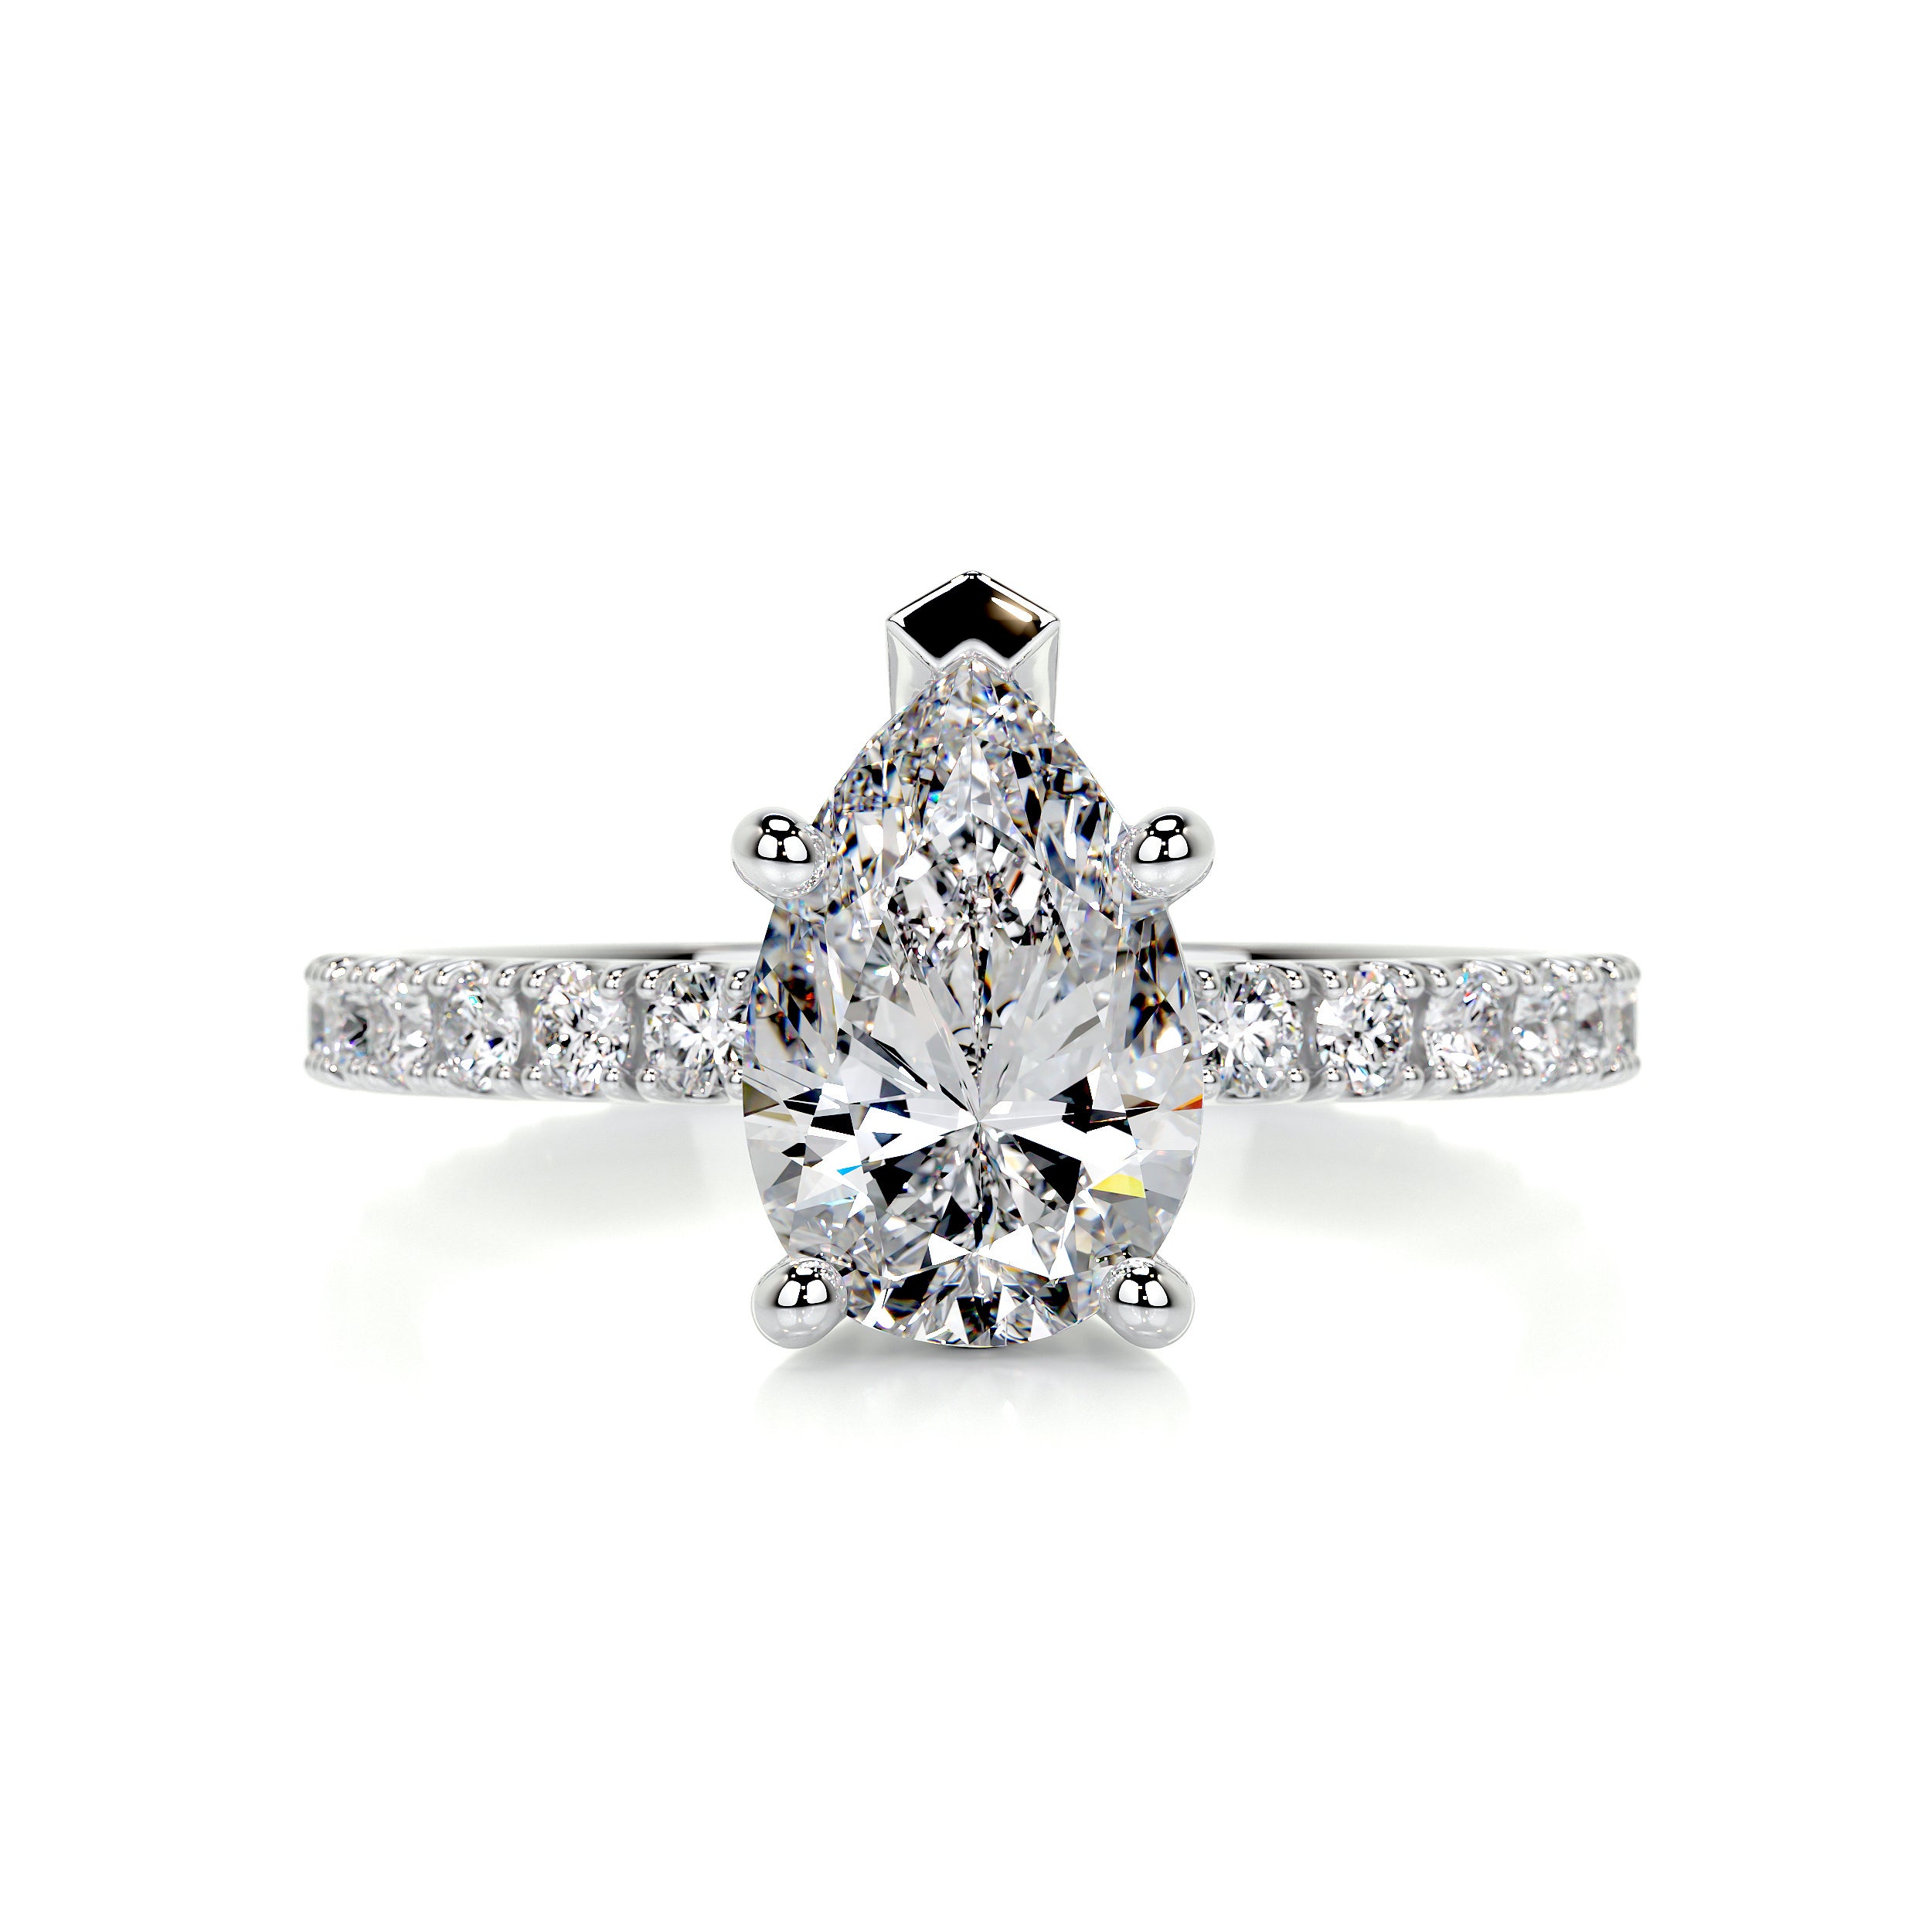 Hailey Diamond Engagement Ring   (2 Carat) -14K White Gold